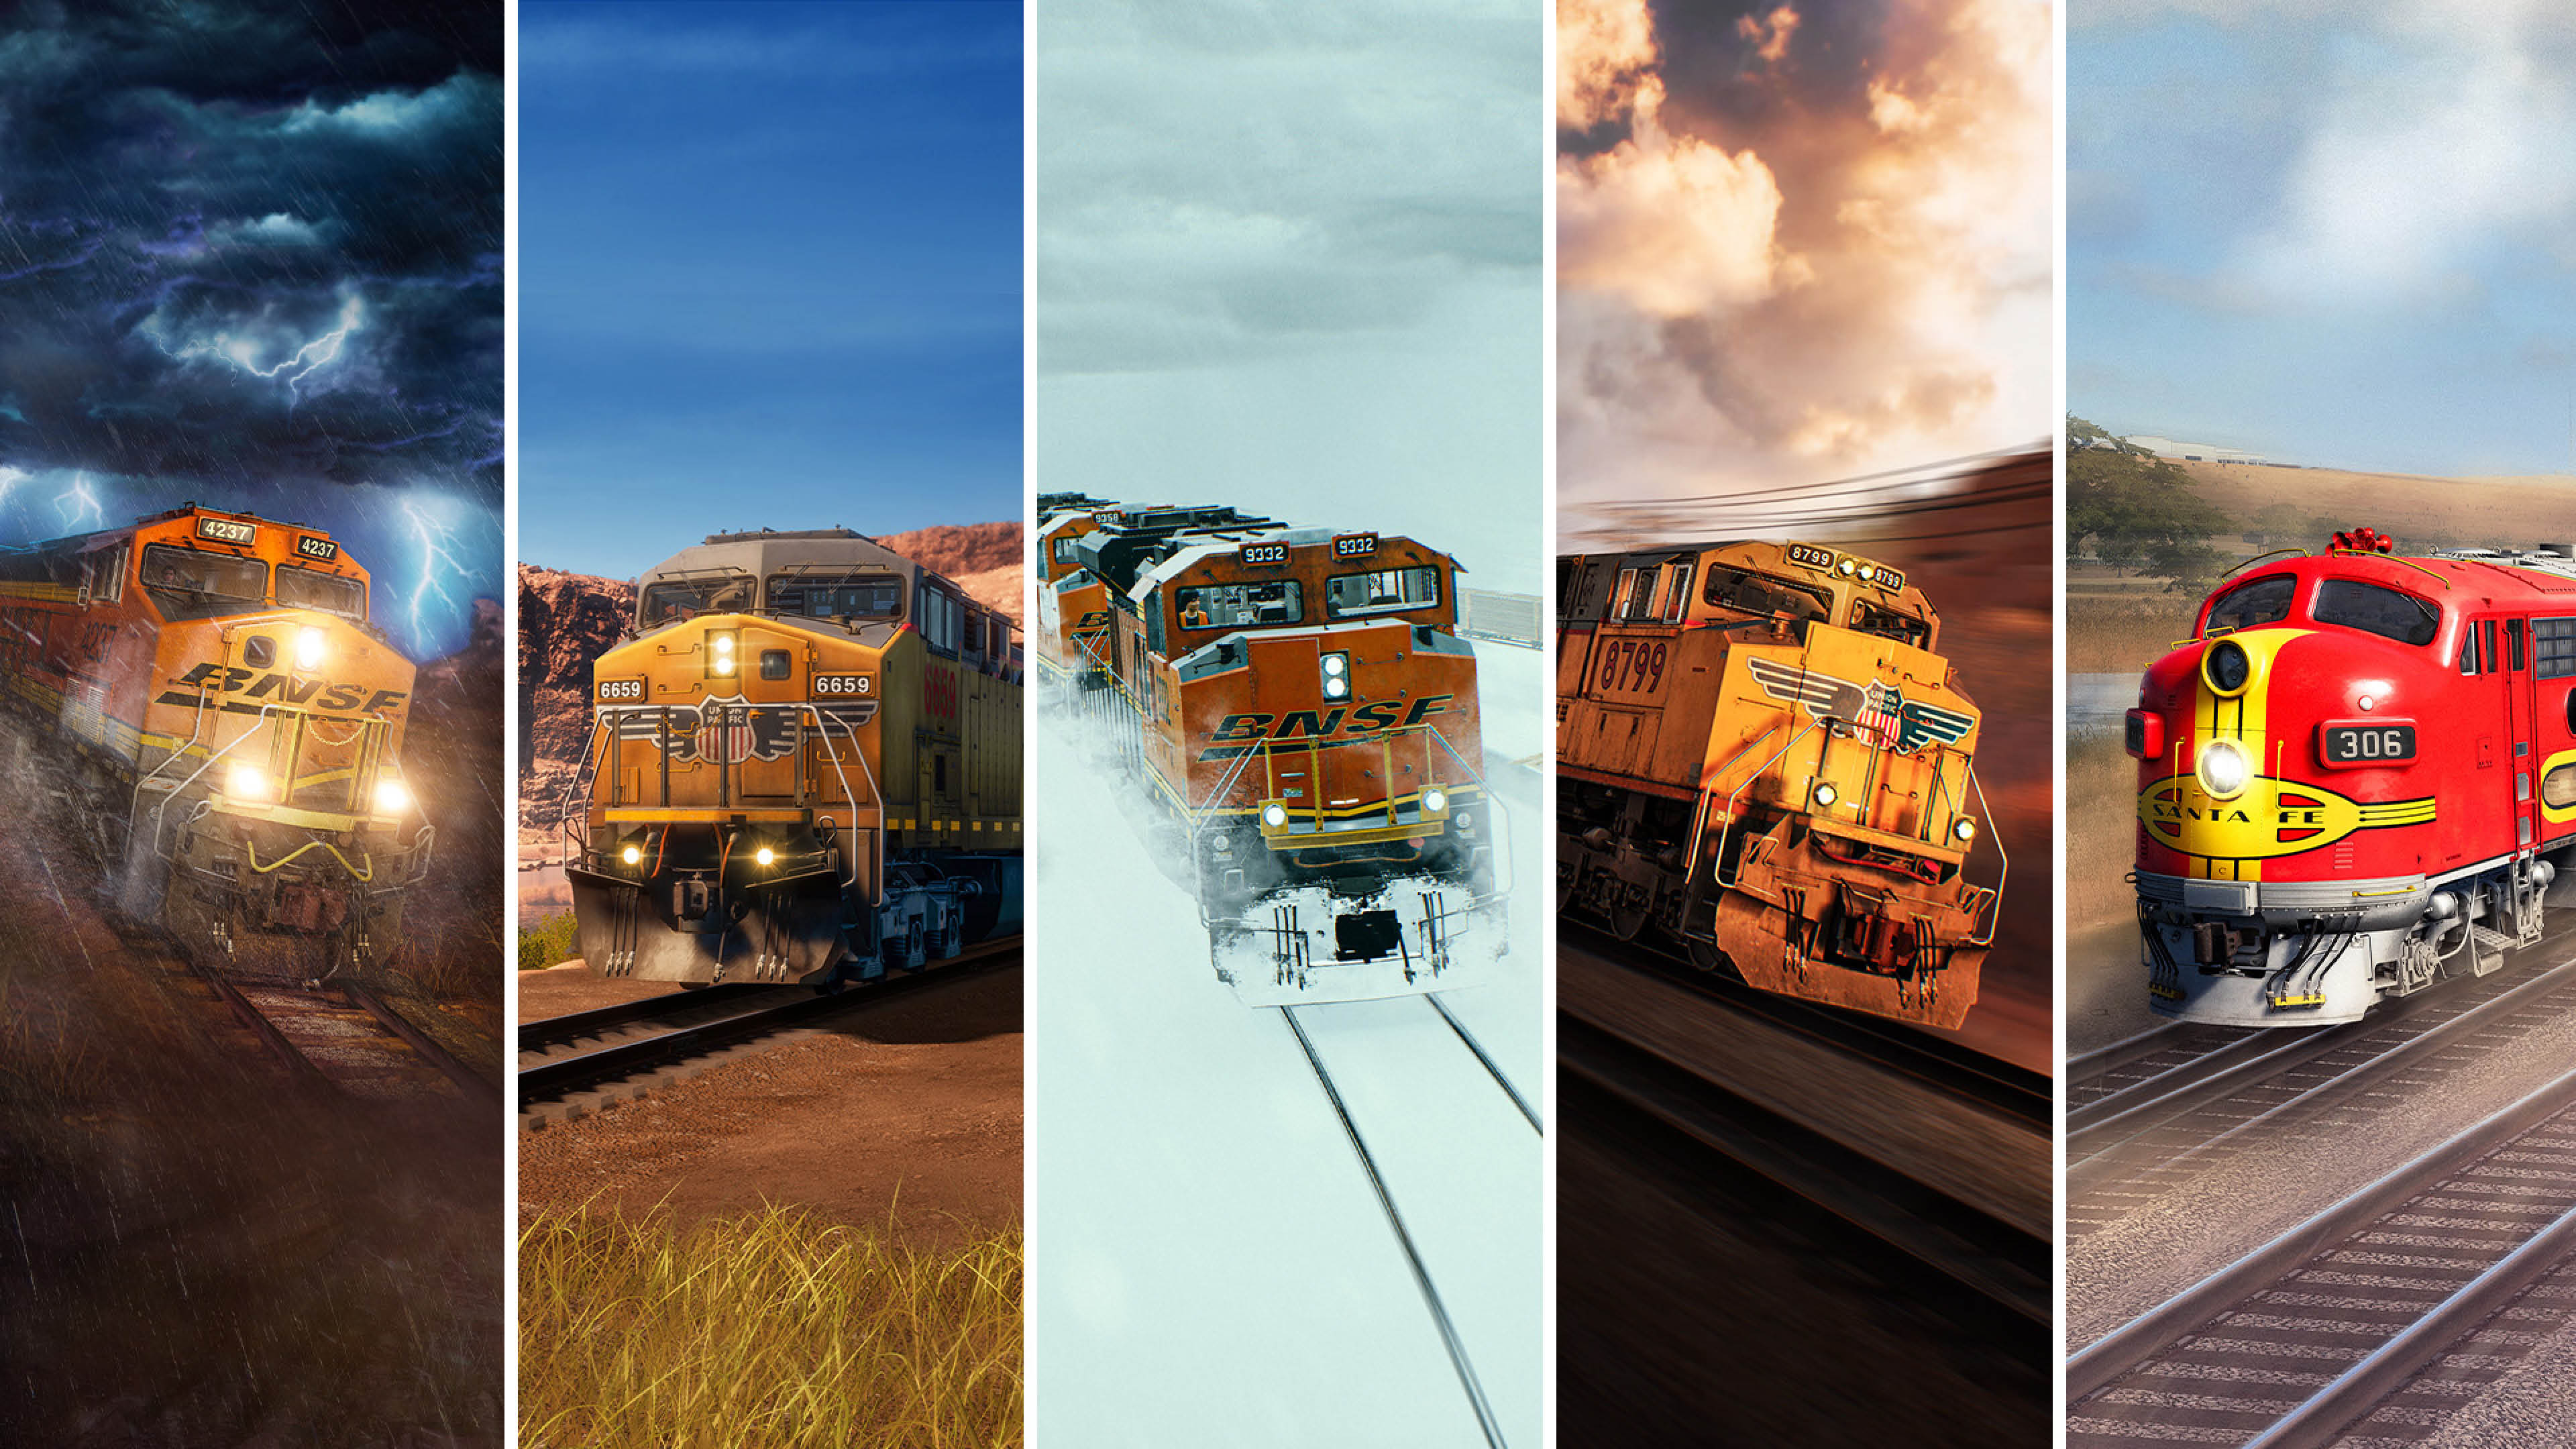 Train Sim World® 4: USA Expansion Bundle